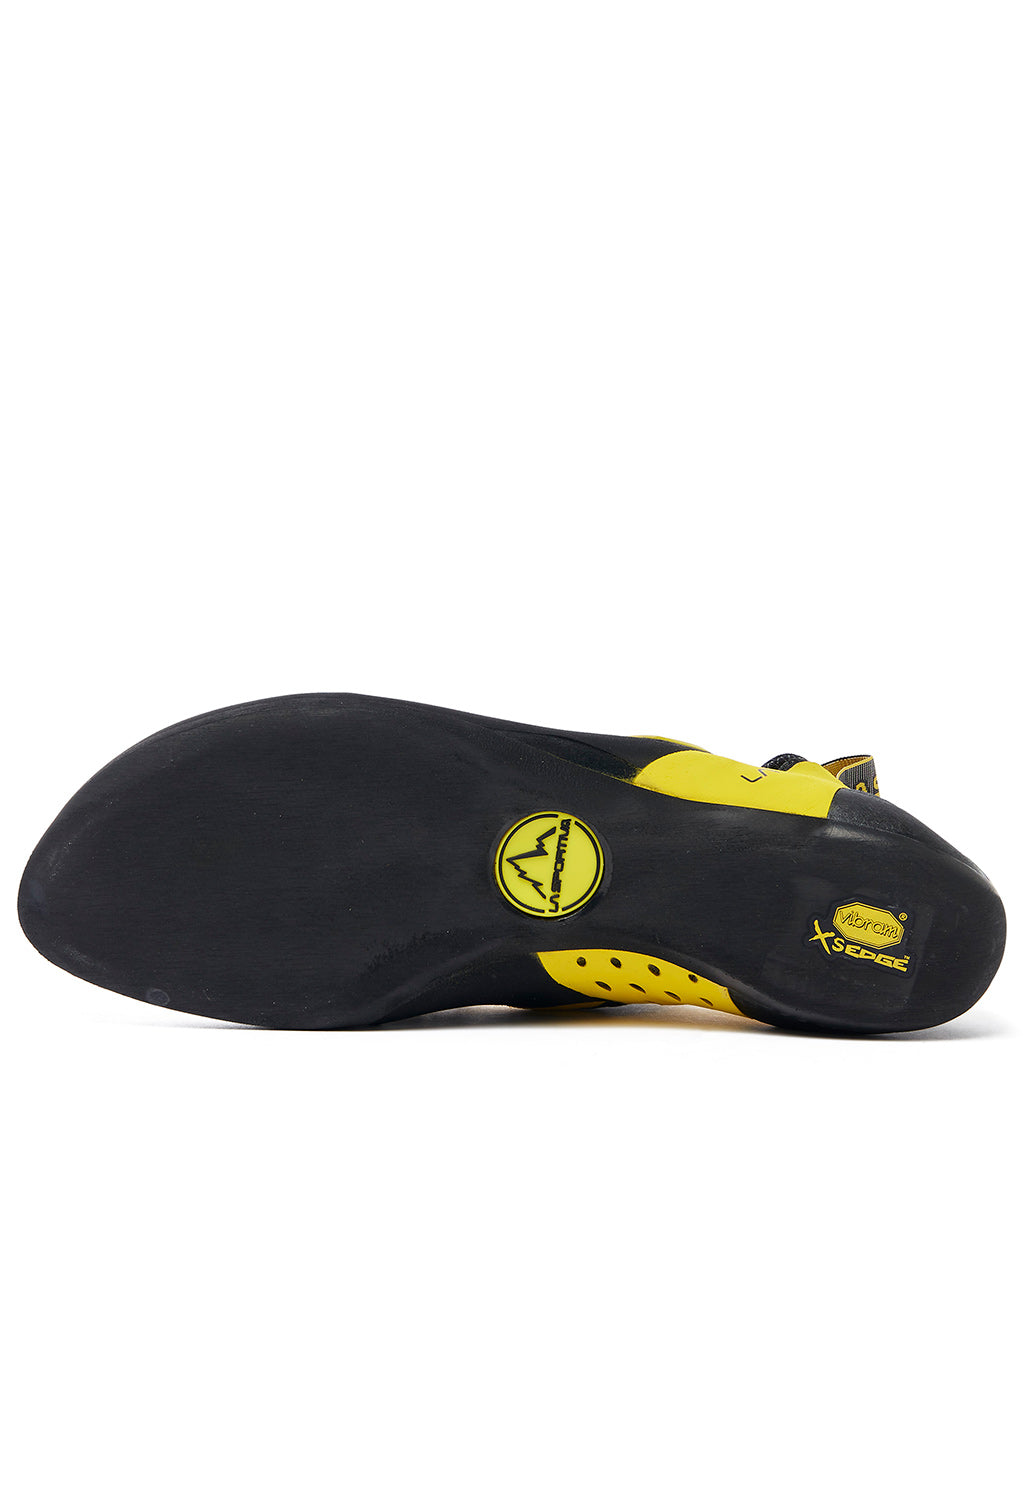 La Sportiva Katana Men's Shoes - Yellow/Black